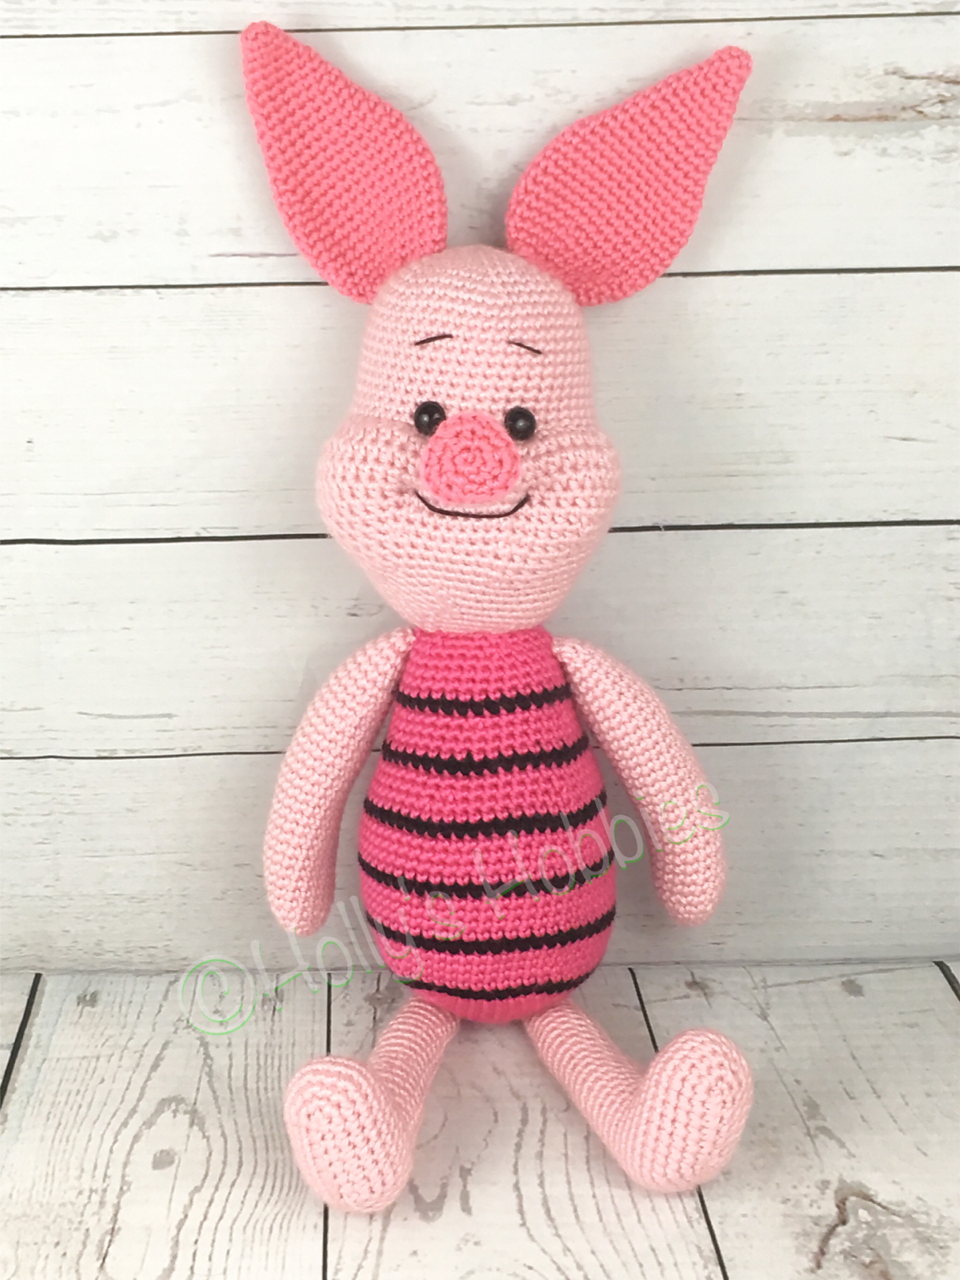 Piglet The Pig By Holly s Hobbies Disney Crochet Patterns Crochet